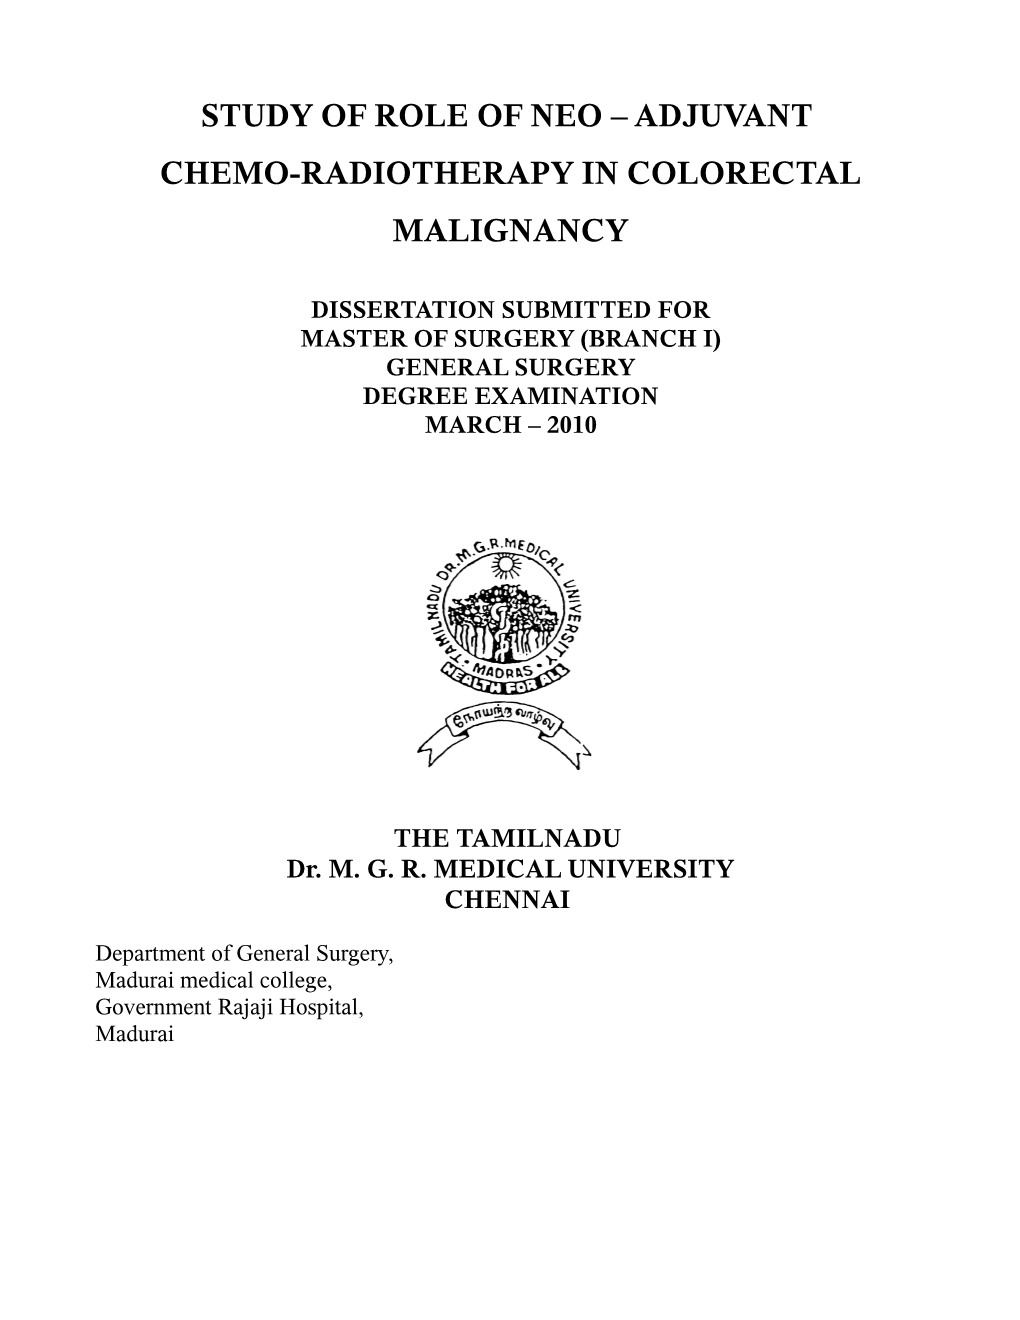 Adjuvant Chemo-Radiotherapy in Colorectal Malignancy